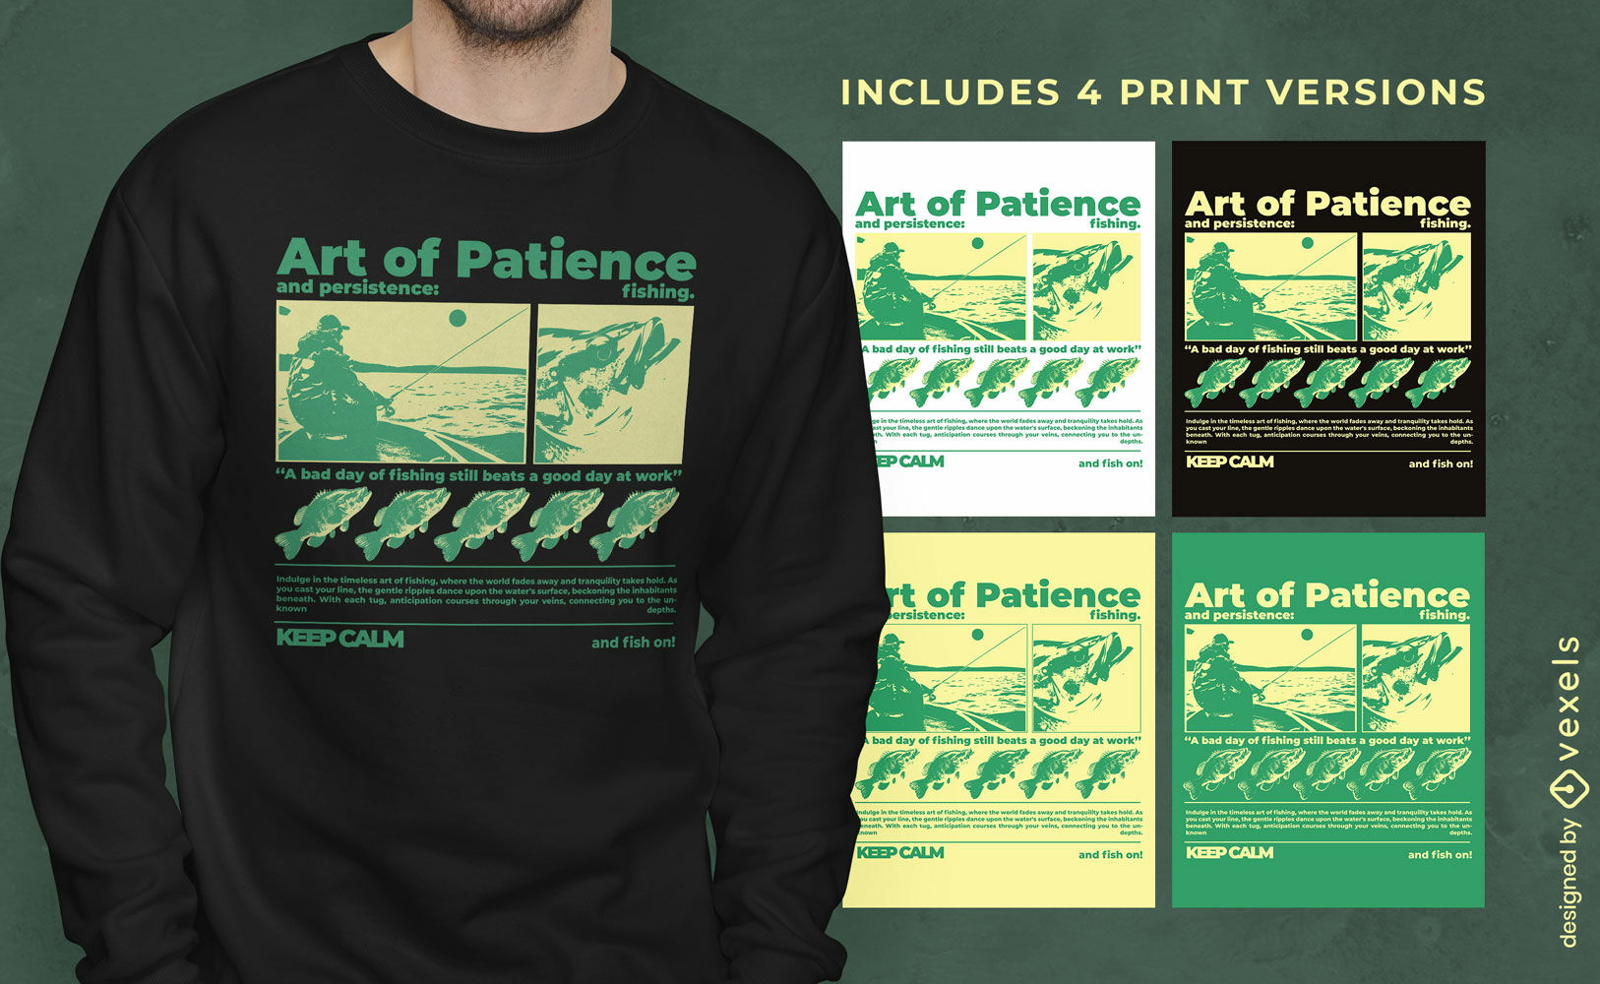 https://images.vexels.com/media/users/3/342842/raw/dcc4cc5a721dcb27f64dc8519416b7c8-fishing-in-the-lake-multiple-t-shirt-design.jpg